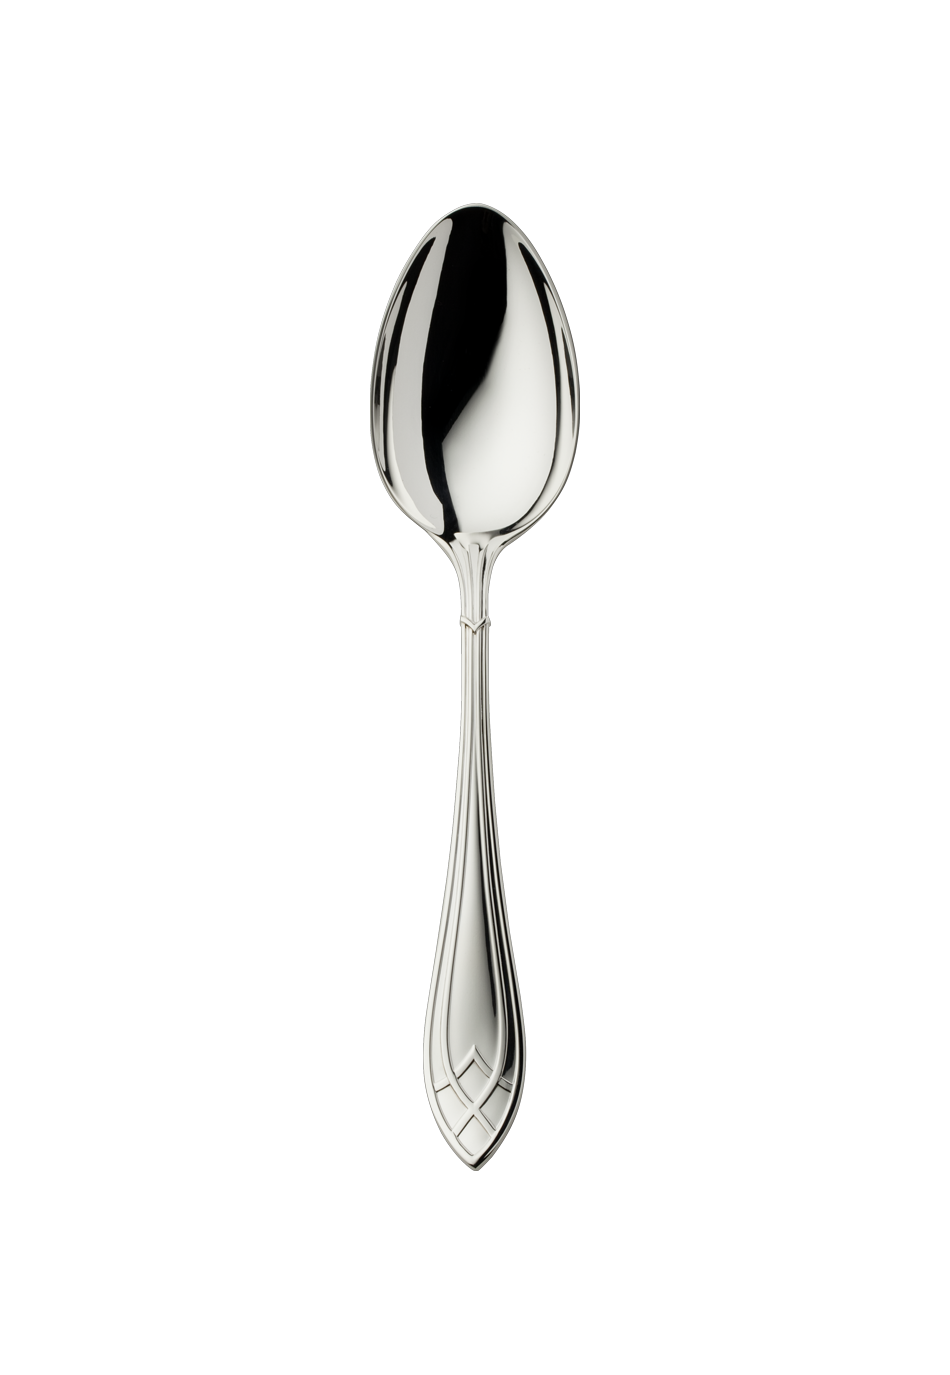 Arcade Menu Spoon (150g massive silverplated)